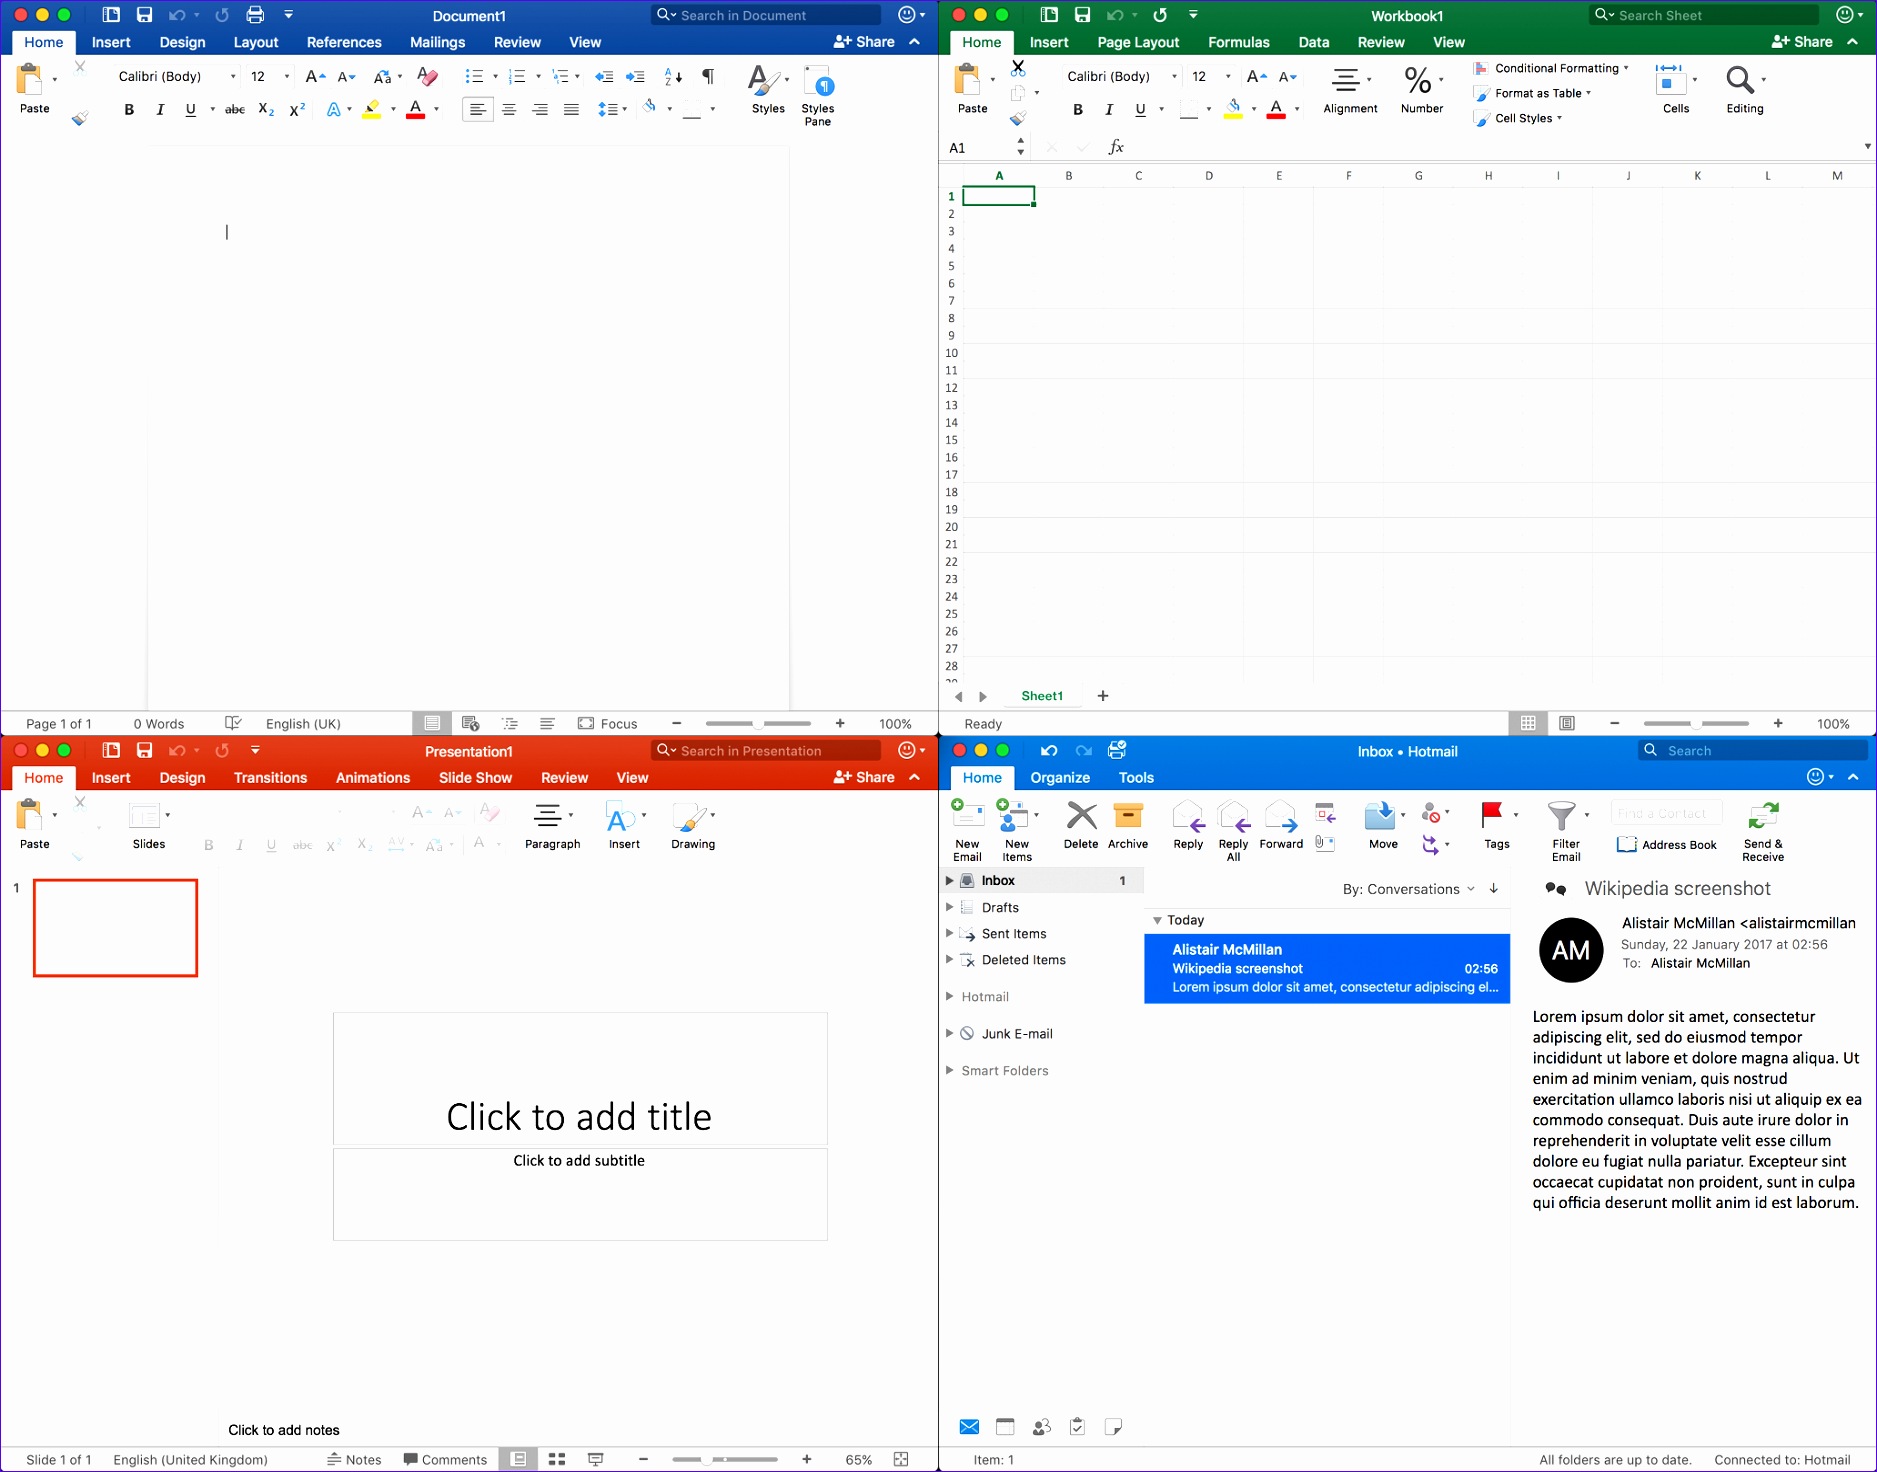 Microsoft fice for Mac 2016 screenshots